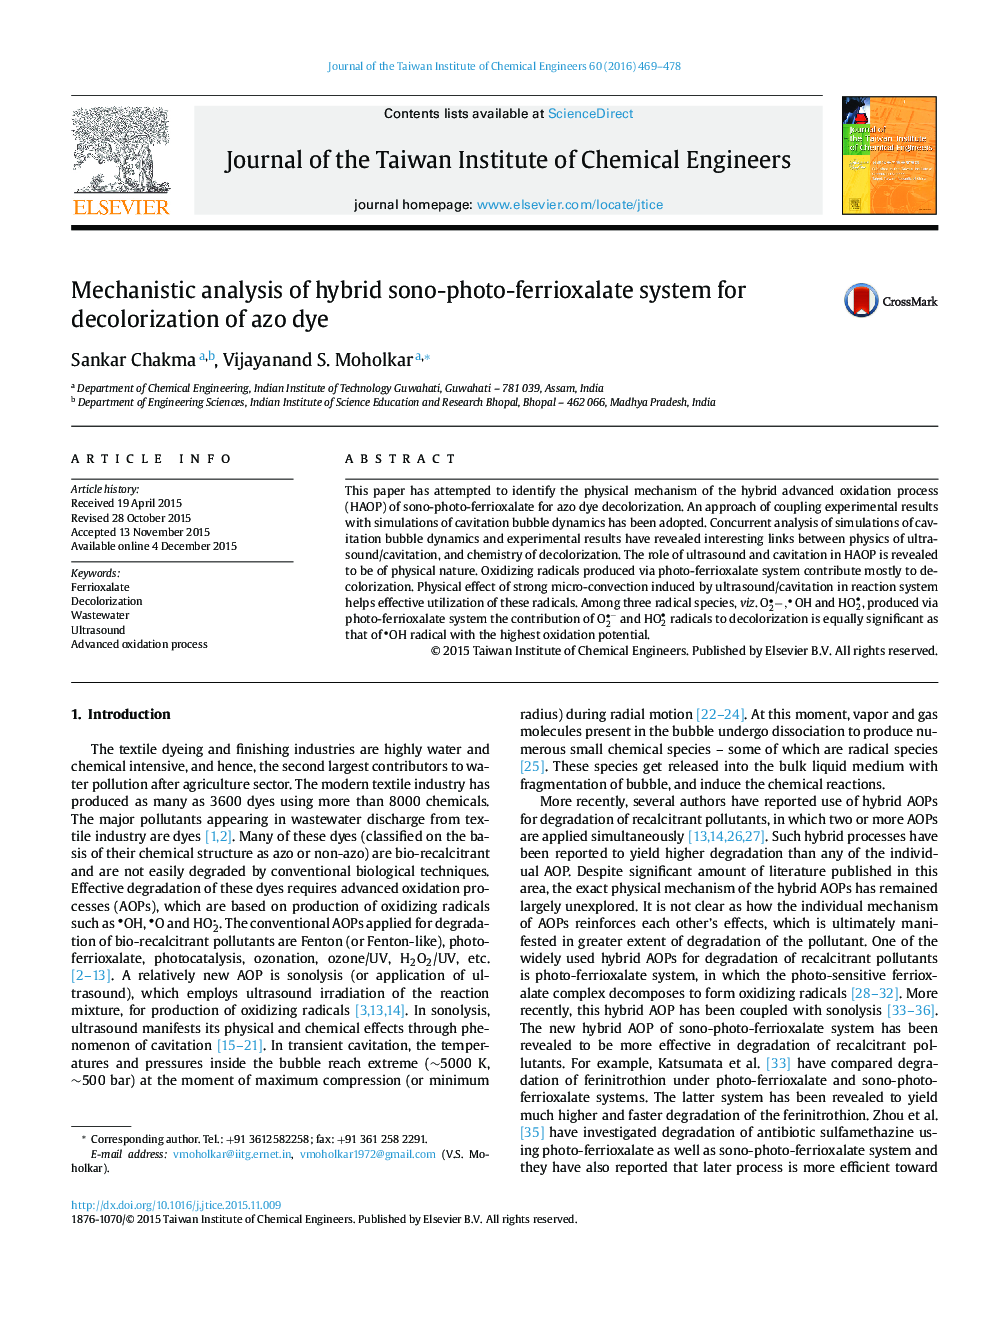 Mechanistic analysis of hybrid sono-photo-ferrioxalate system for decolorization of azo dye